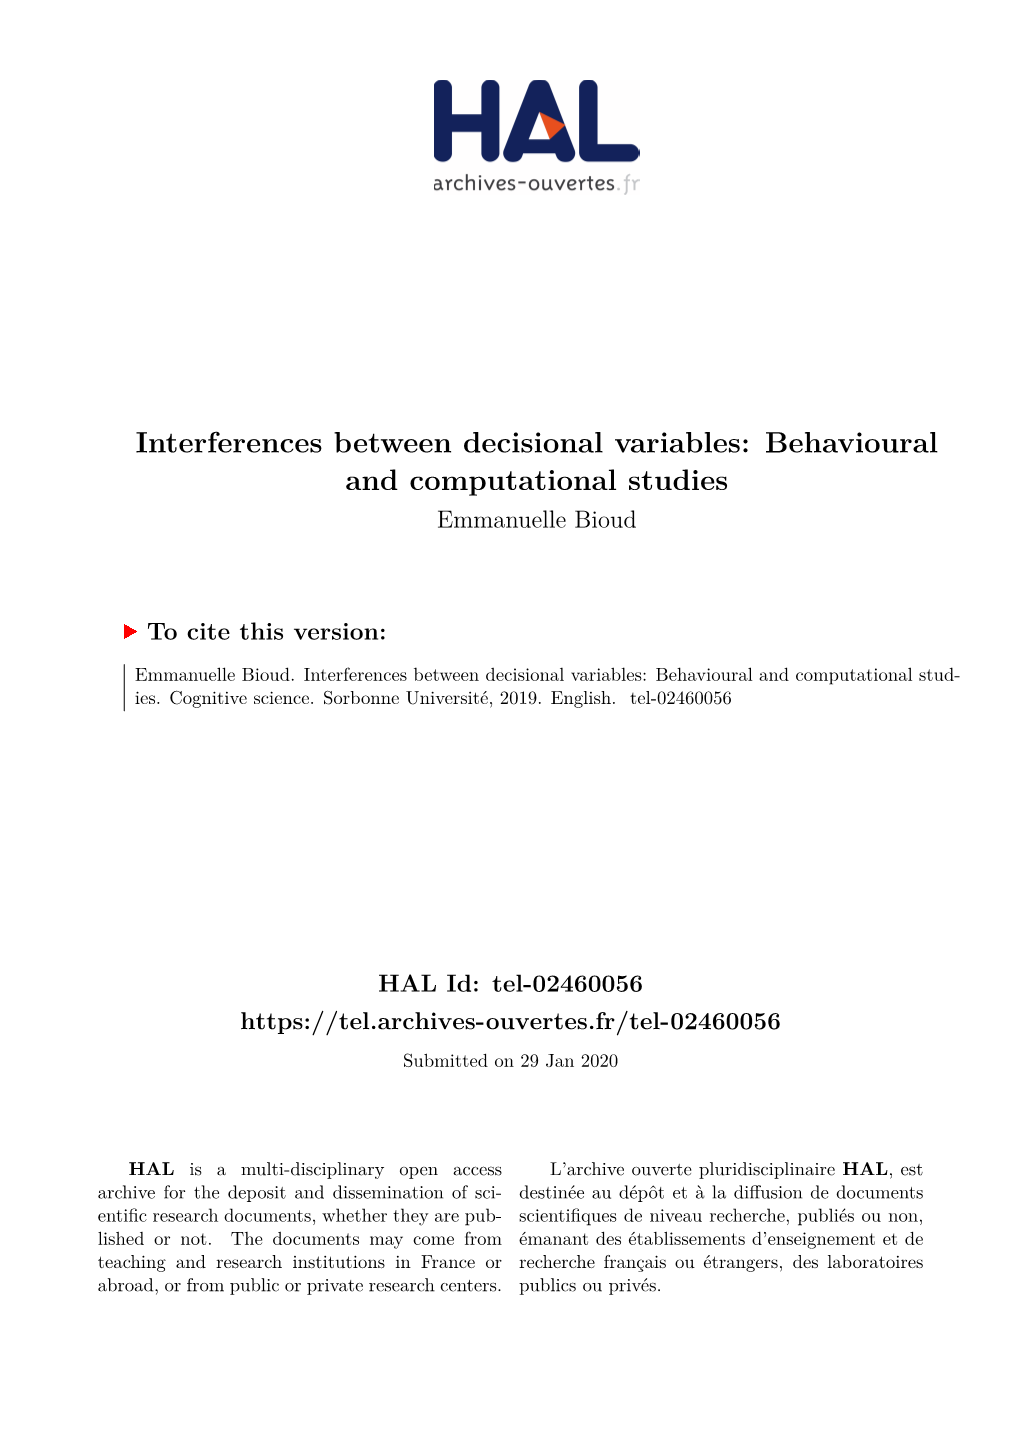 Interferences Between Decisional Variables: Behavioural and Computational Studies Emmanuelle Bioud